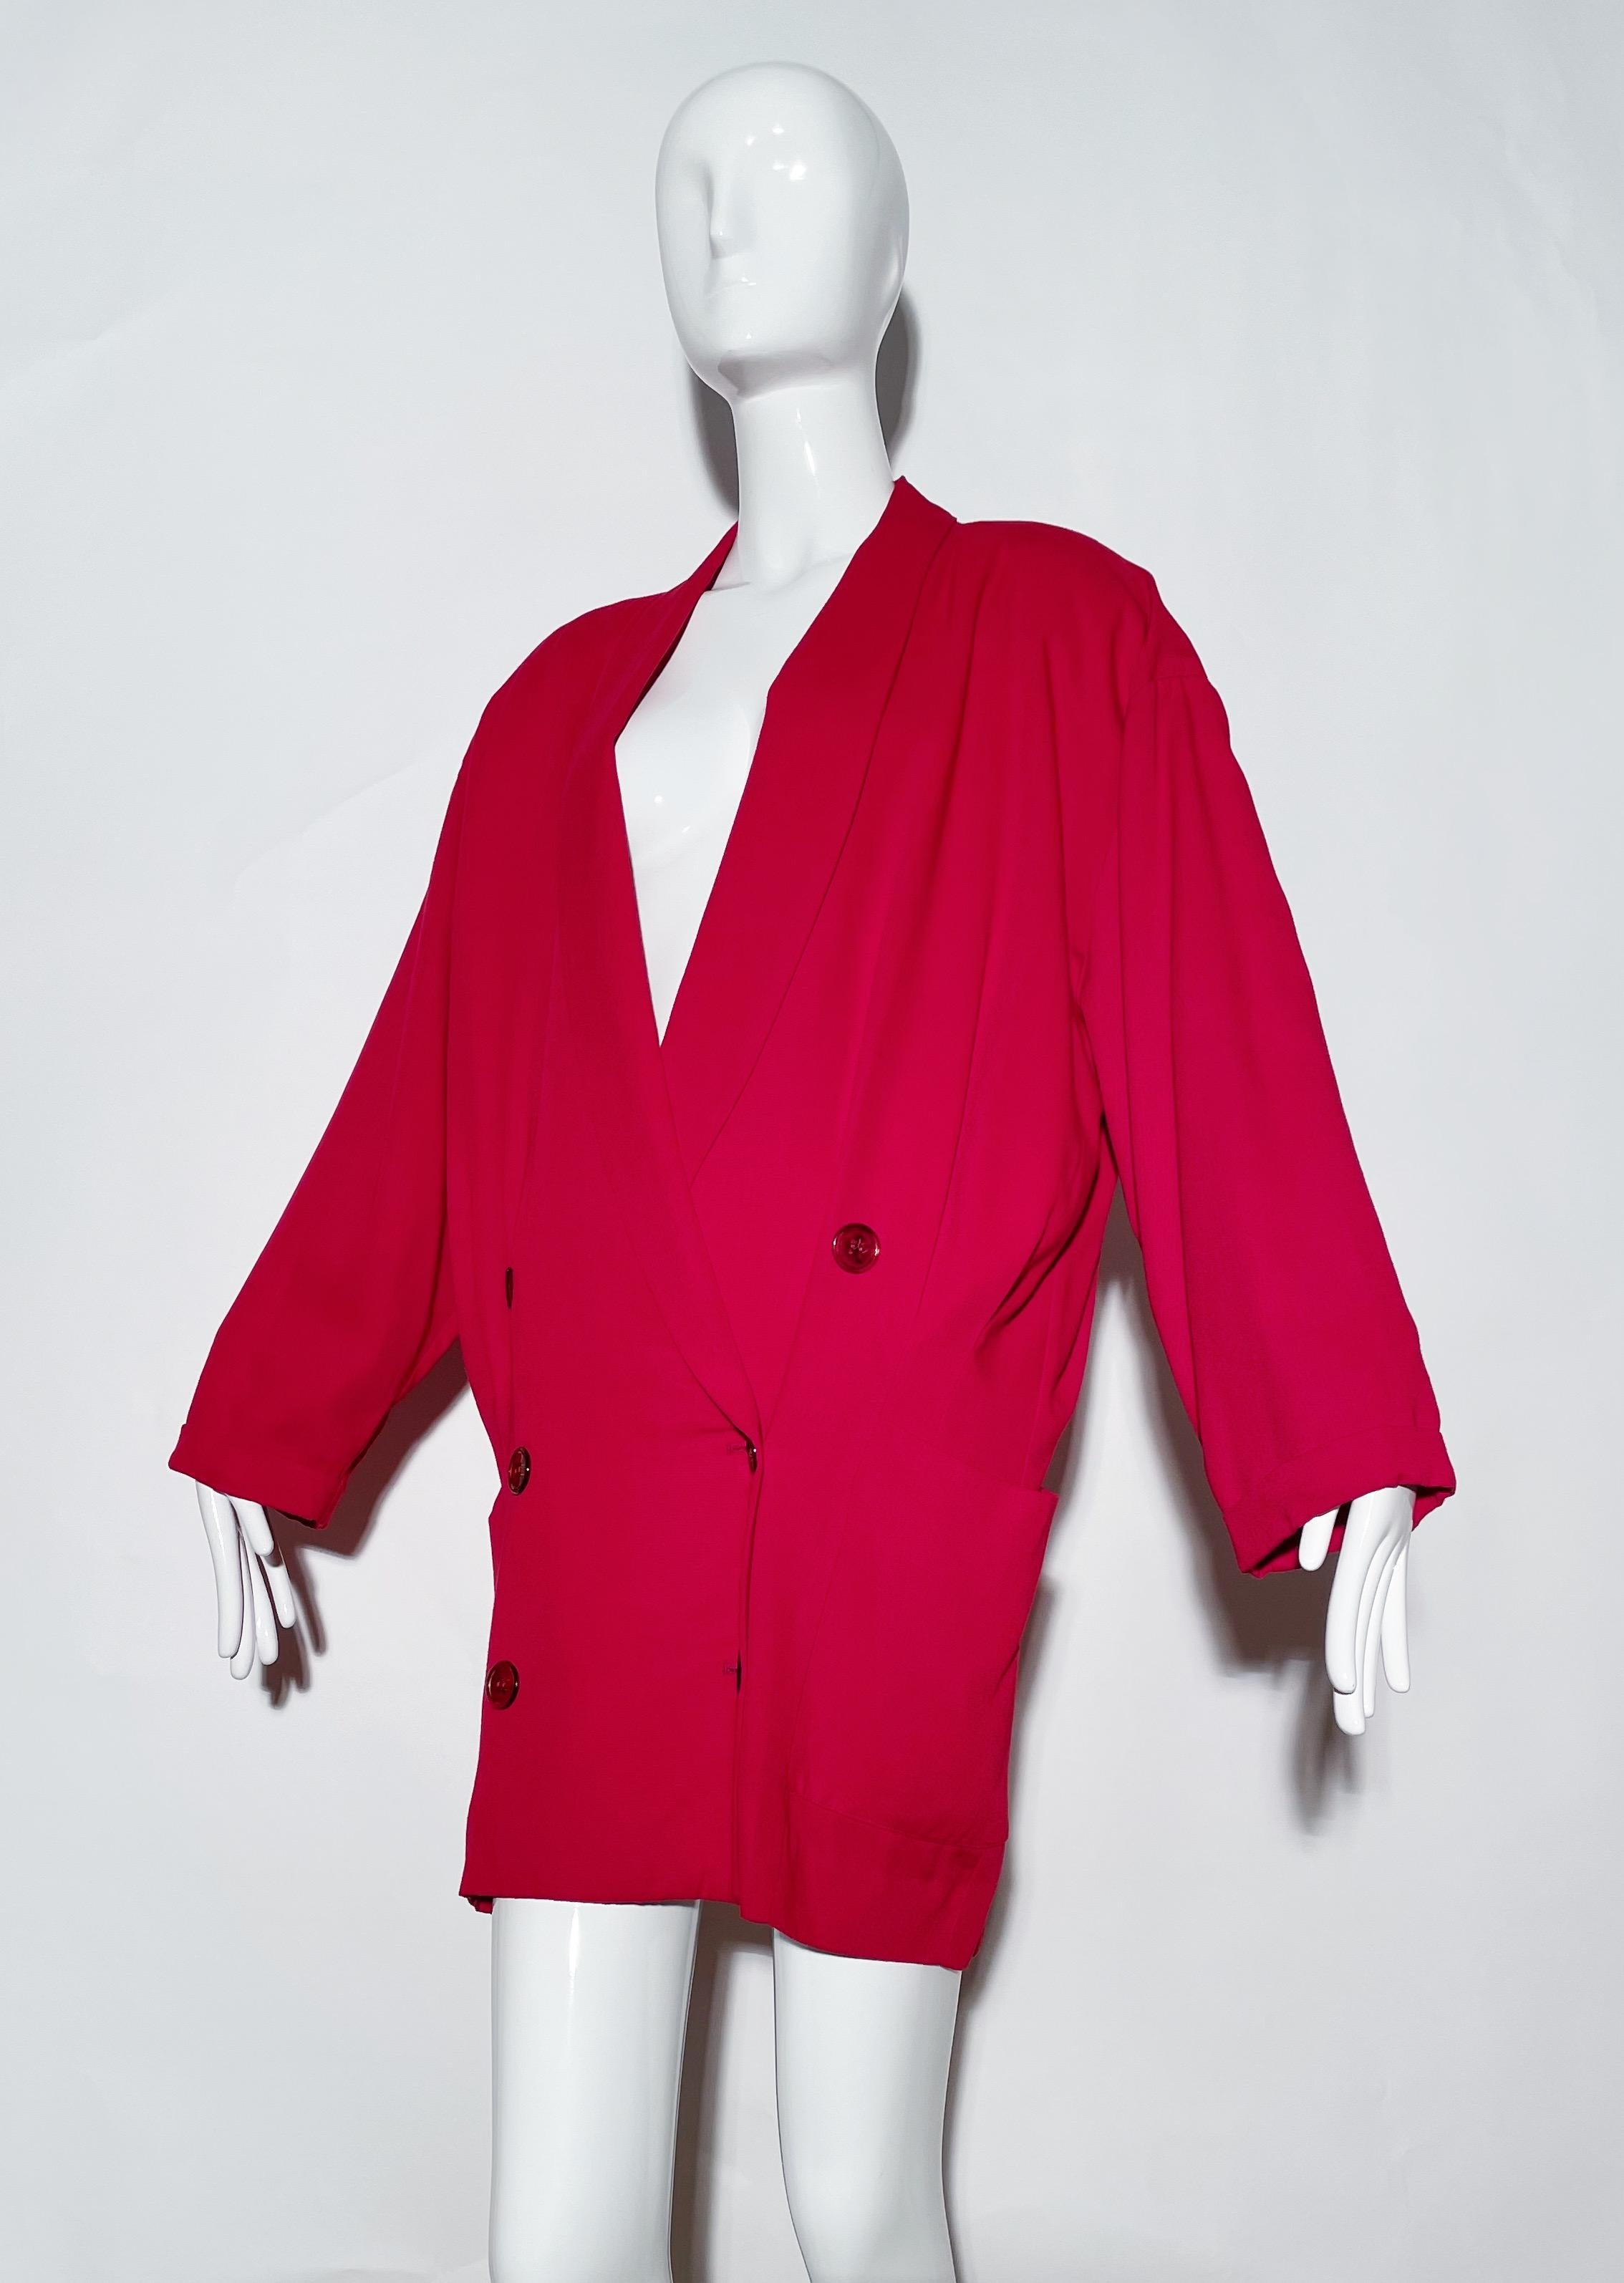 Norma Kamali Red Blazer Dress For Sale 2